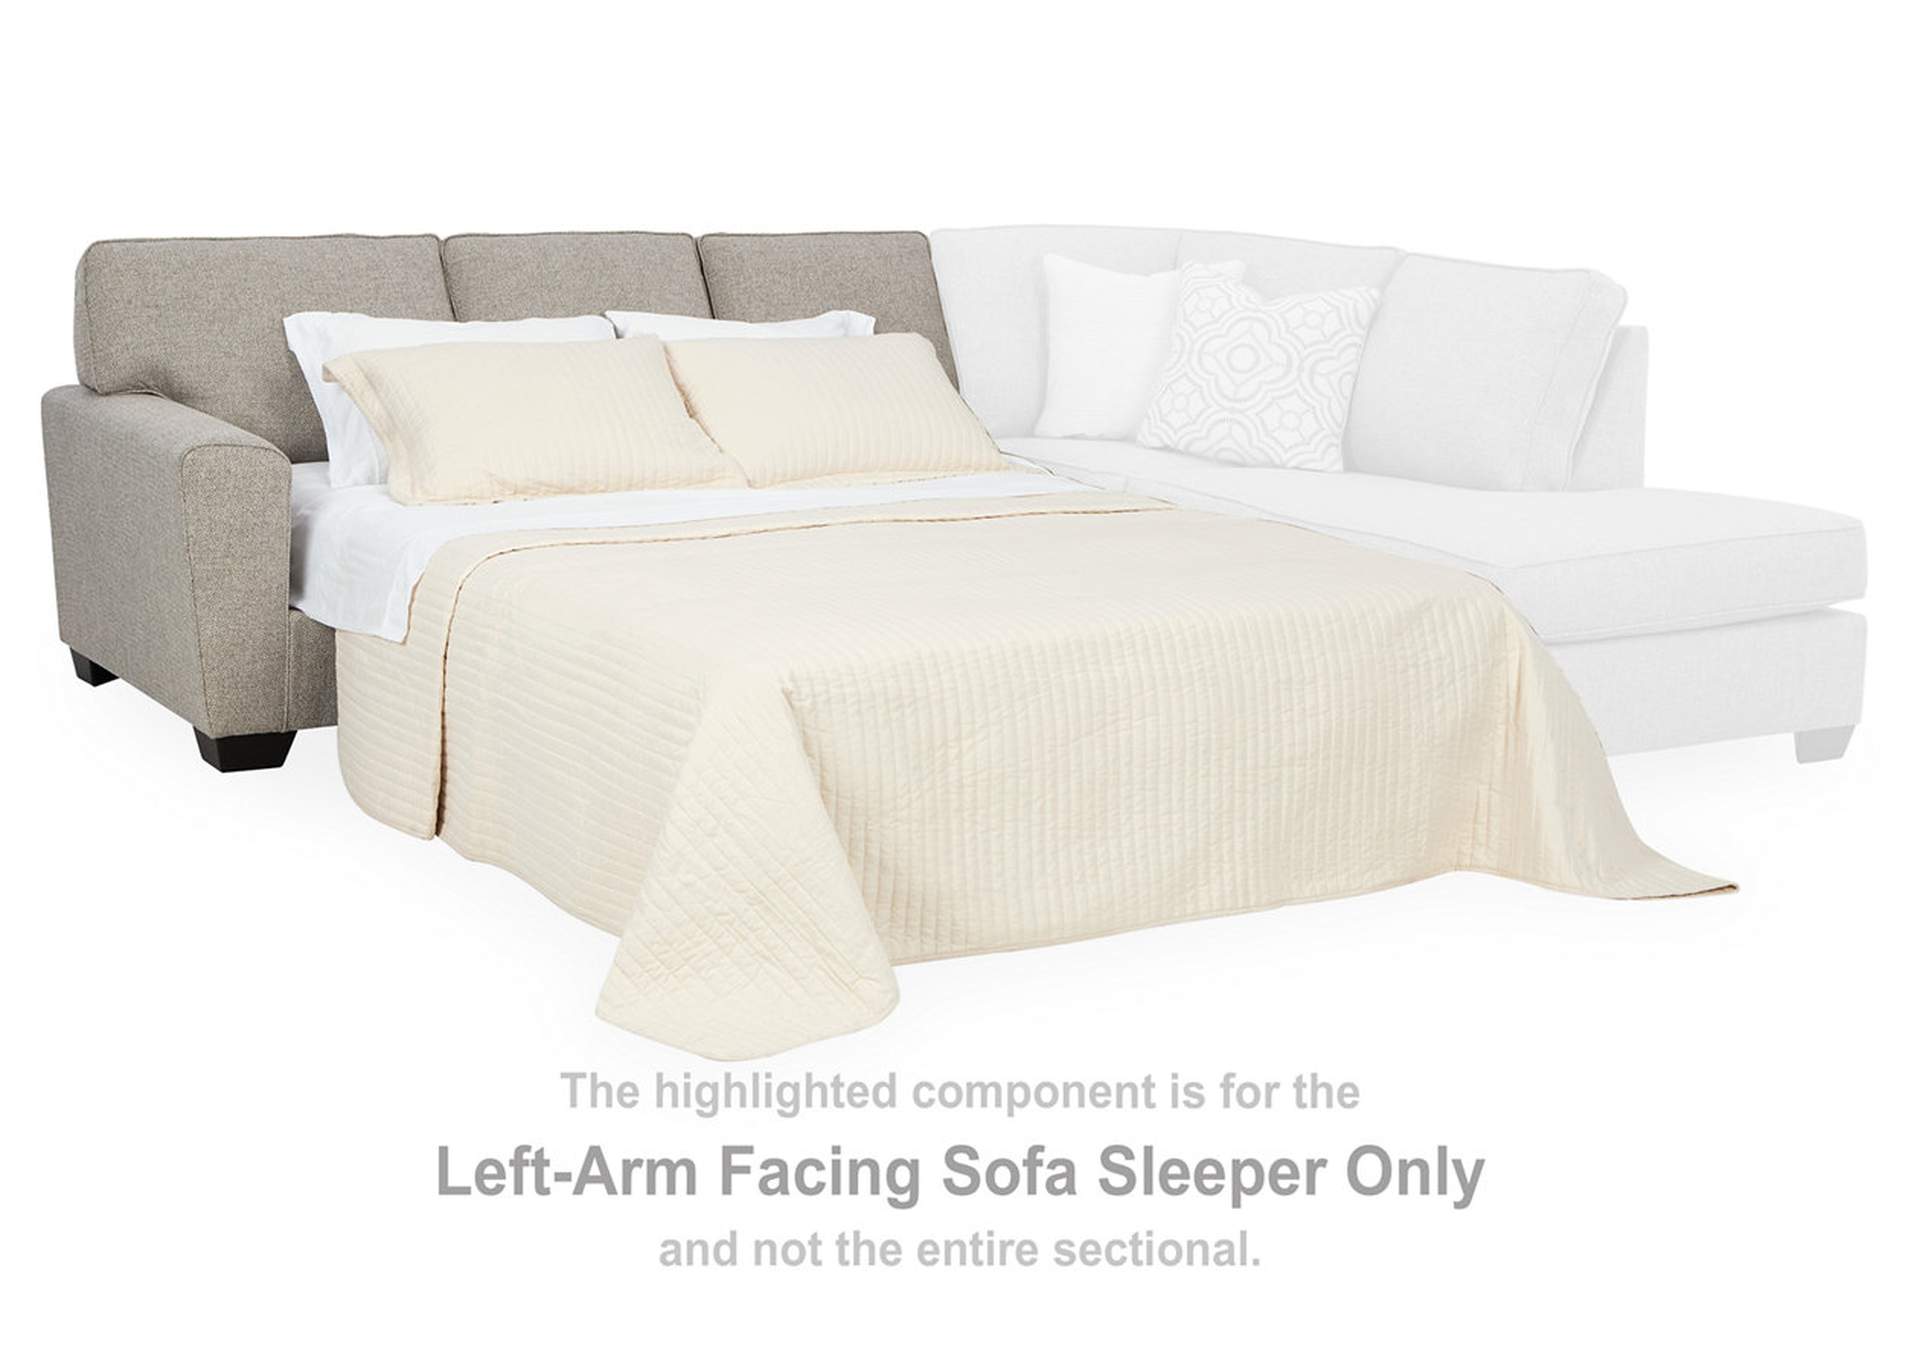 Reydell Left-Arm Facing Queen Sofa Sleeper,Signature Design By Ashley